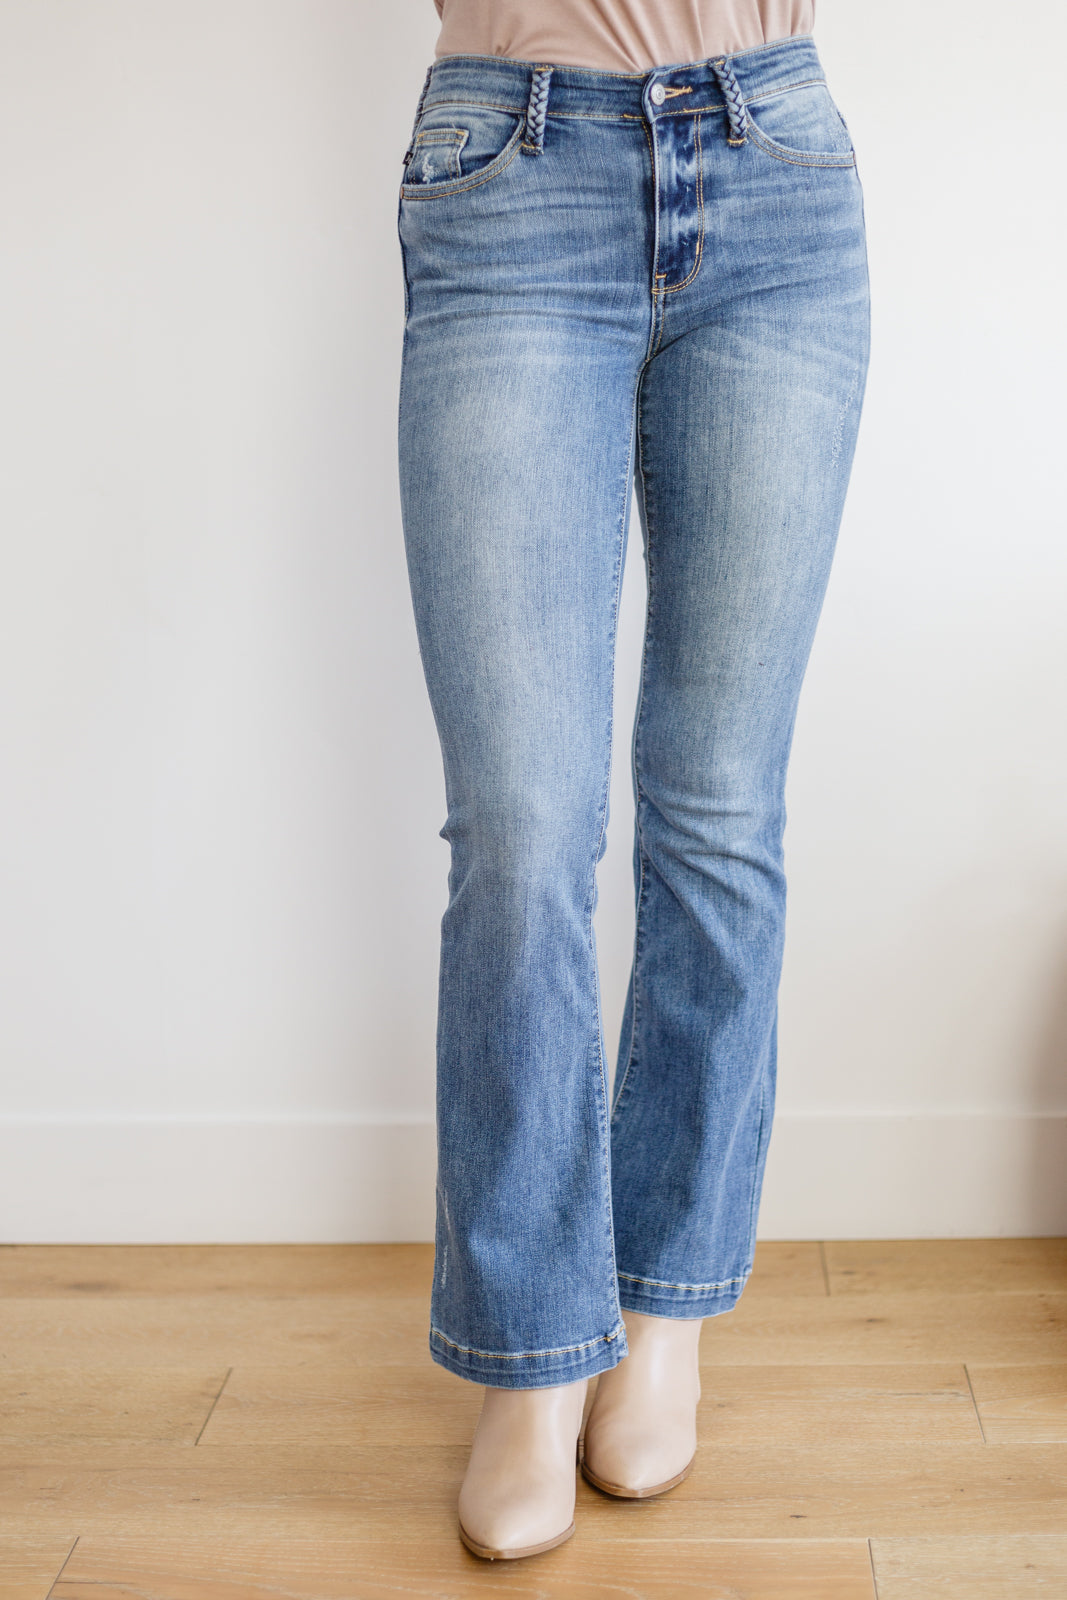 Judy Blue Rapunzel Braided Belt Loop Mid Rise Jeans 0/24 Medium Wash 